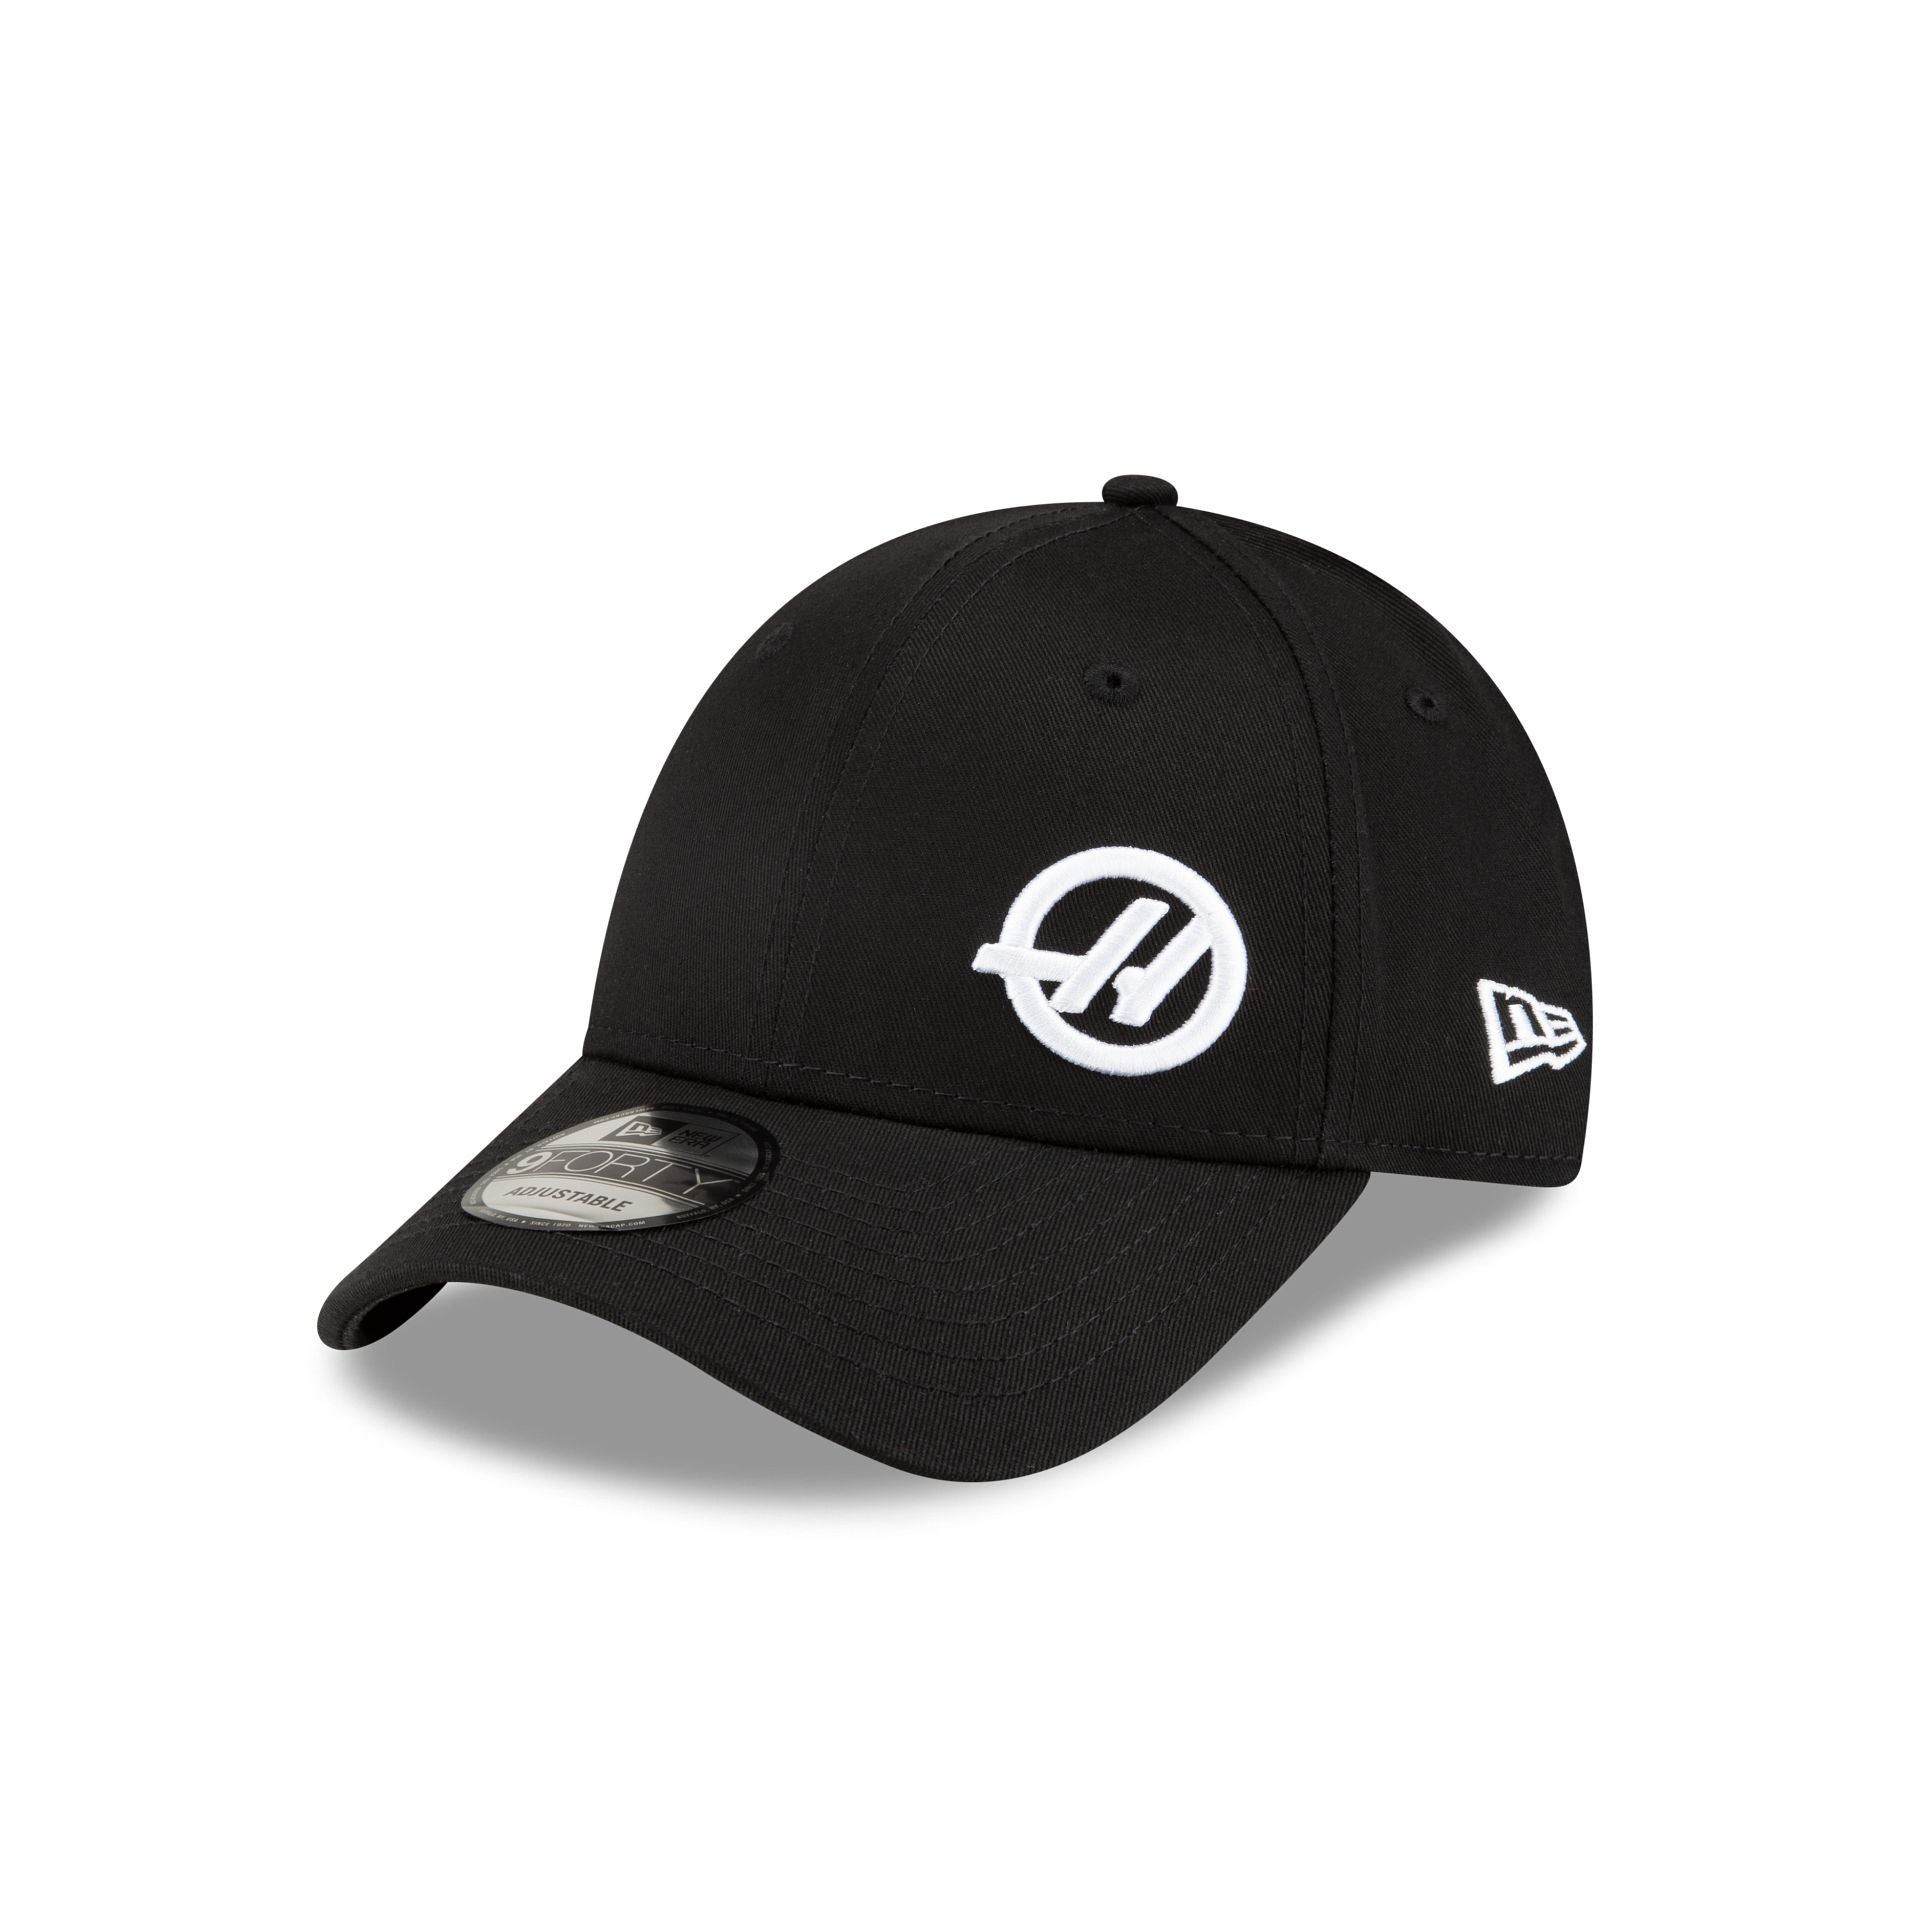 Haas F1 Team Black 9FORTY Snapback Hat – New Era Cap